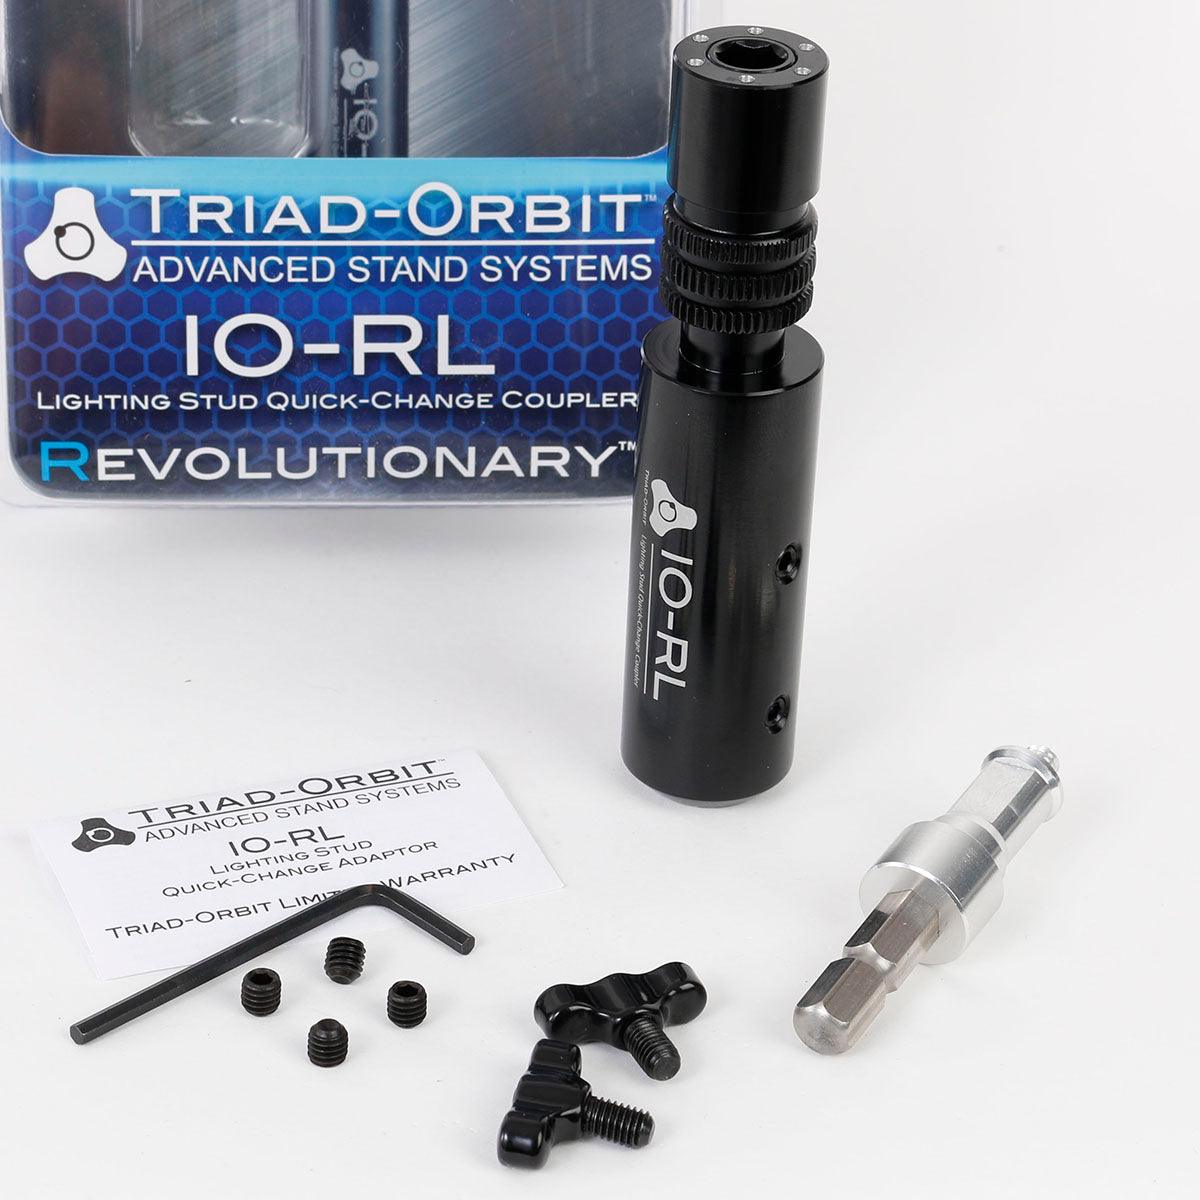 Triad-Orbit IO-RL Quick-Change Coupler for Lighting Stands